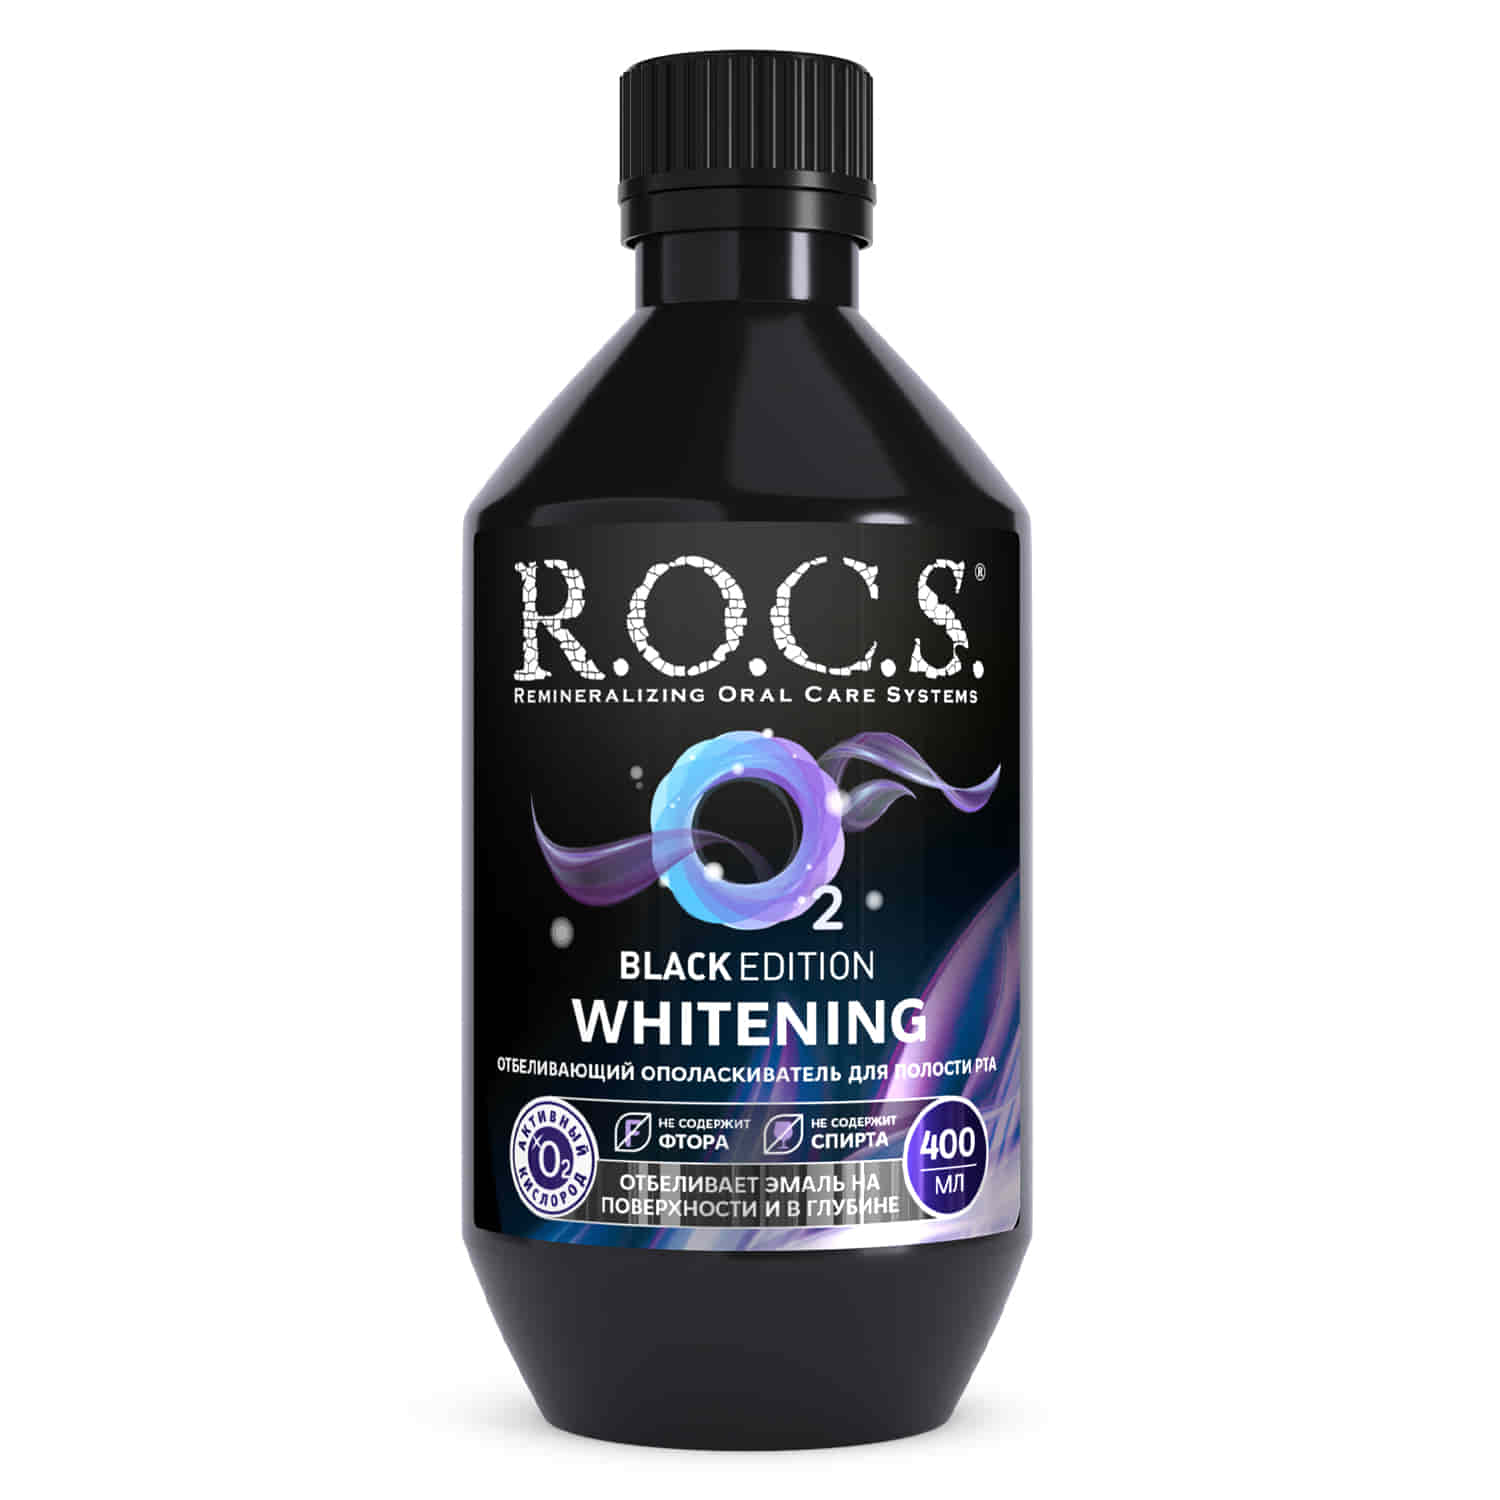 Ополаскиватель ROCS Black edition Whitening